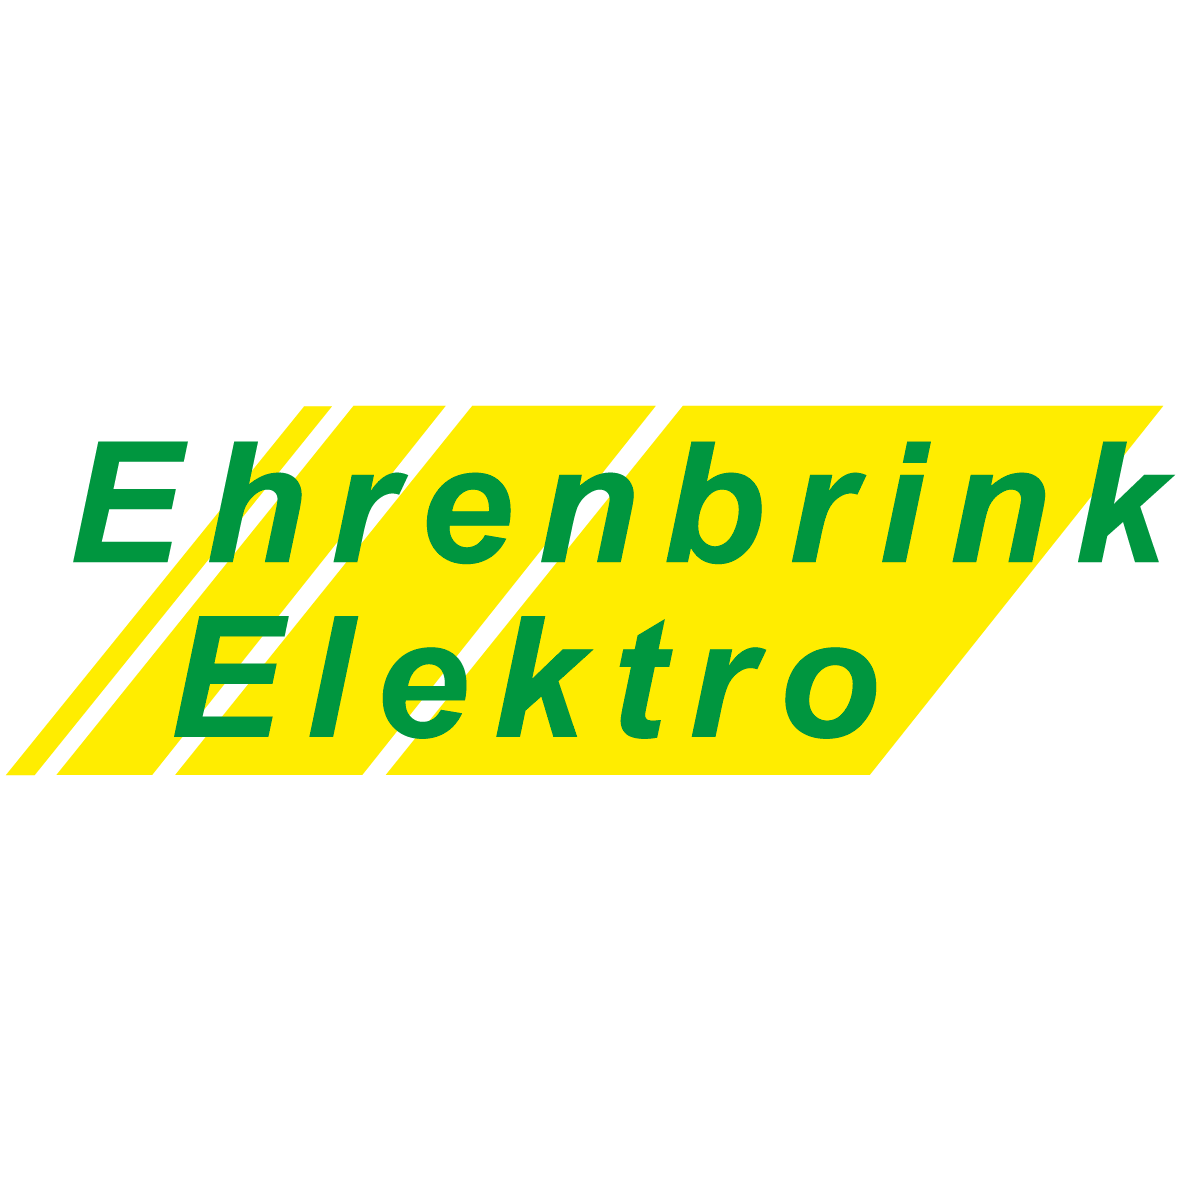 Ehrenbrink Elektro in Hagen am Teutoburger Wald - Logo